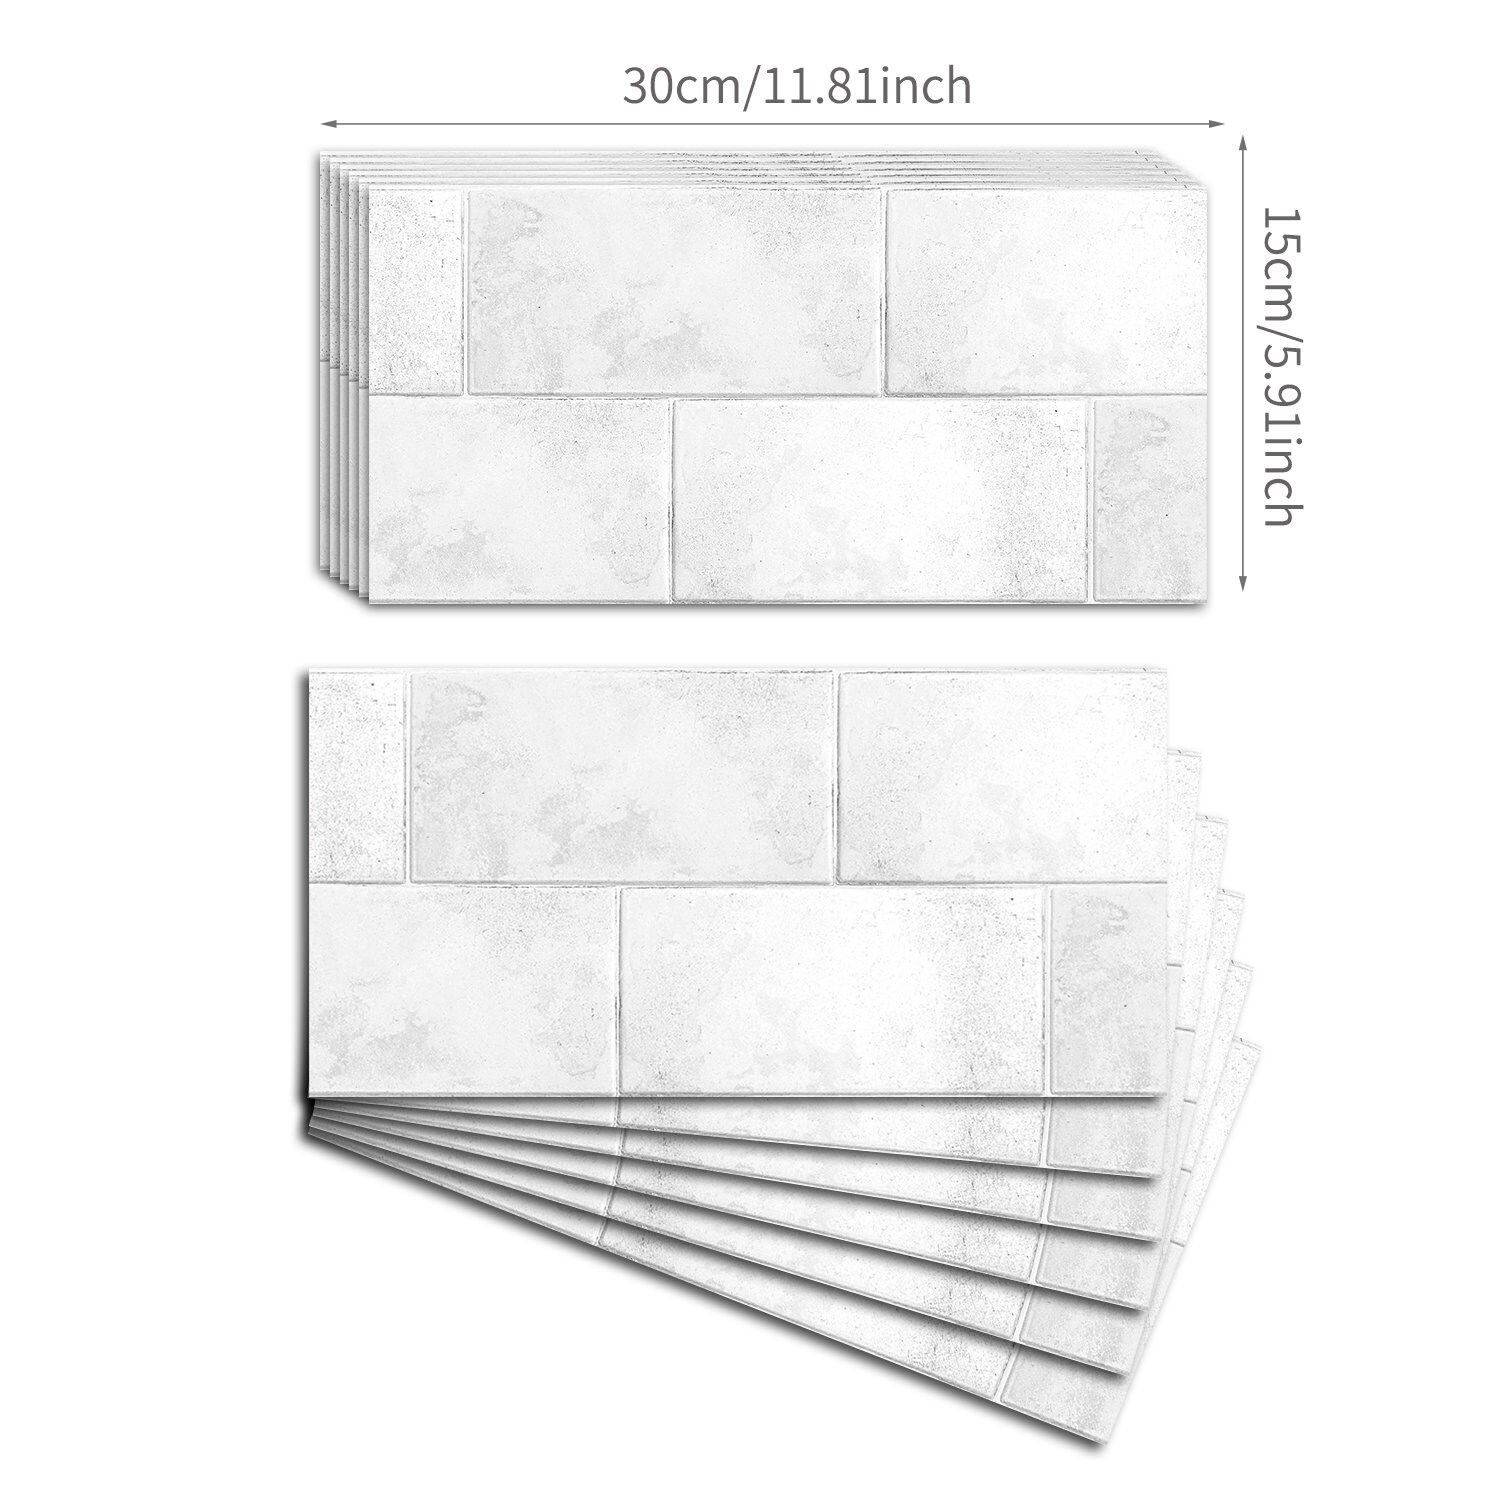 32 Pcs Mirror Tiles Self Adhesive Back Square Bathroom Wall Stickers Mosaic, Size: 5.91 x 5.91